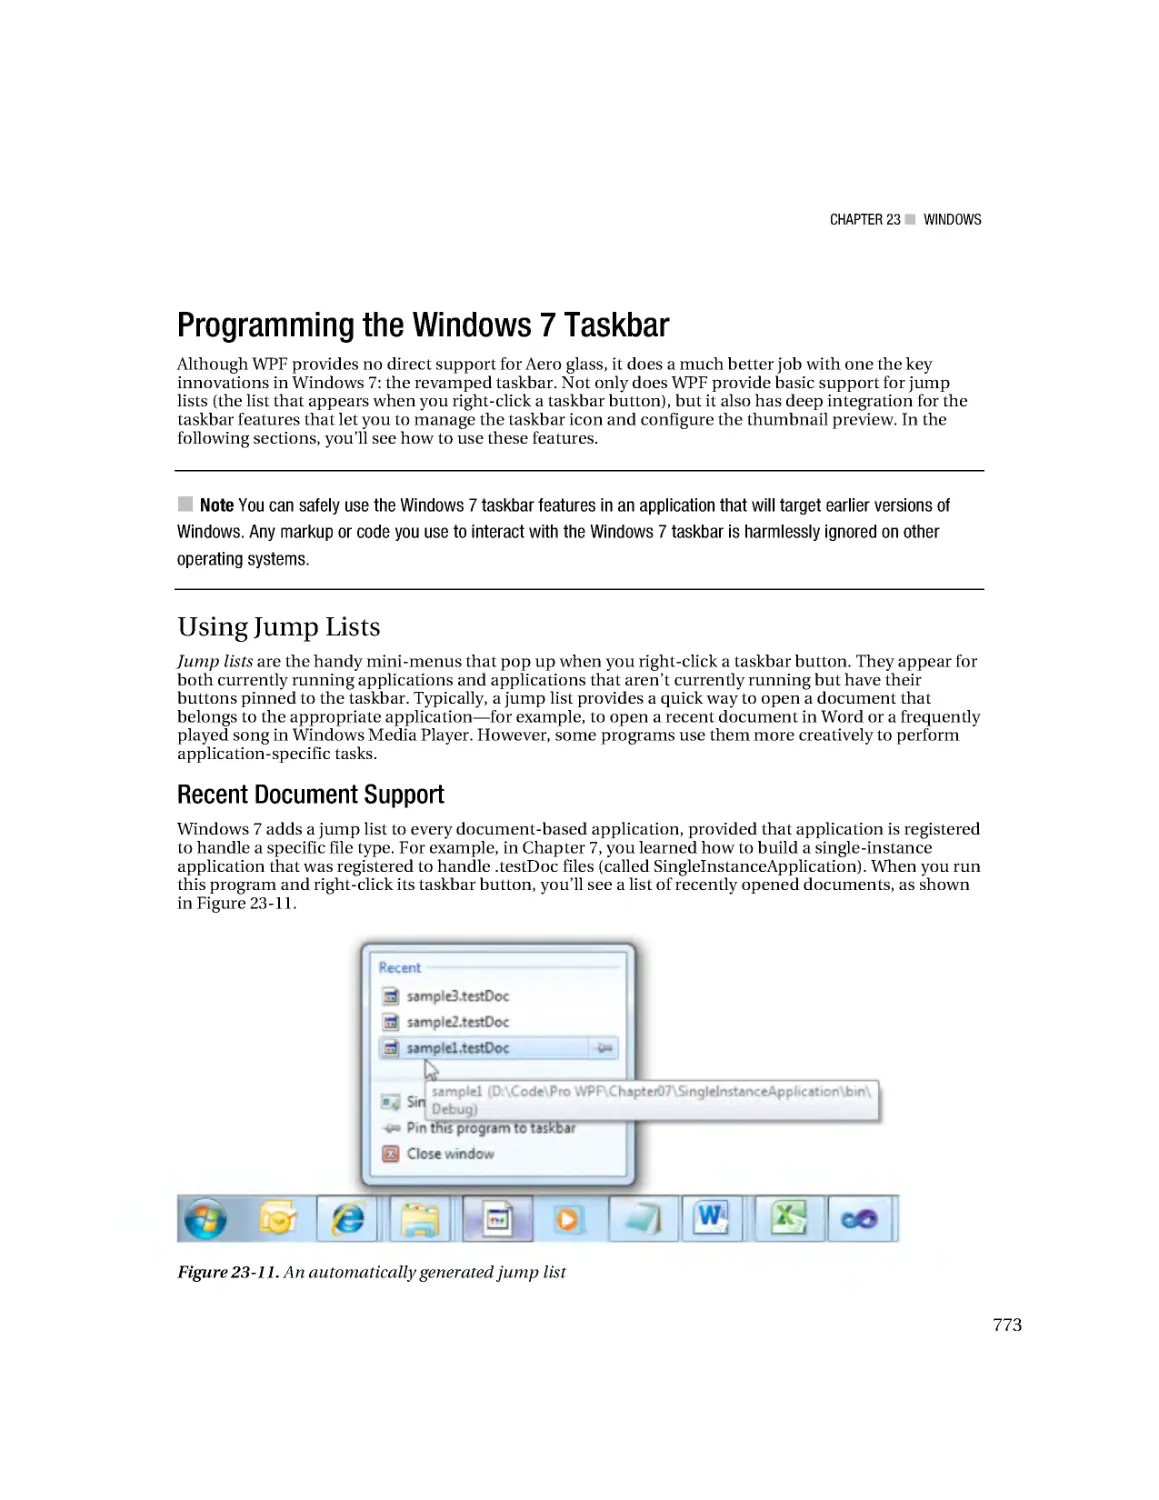 Programming the Windows 7 Taskbar
Recent Document Support